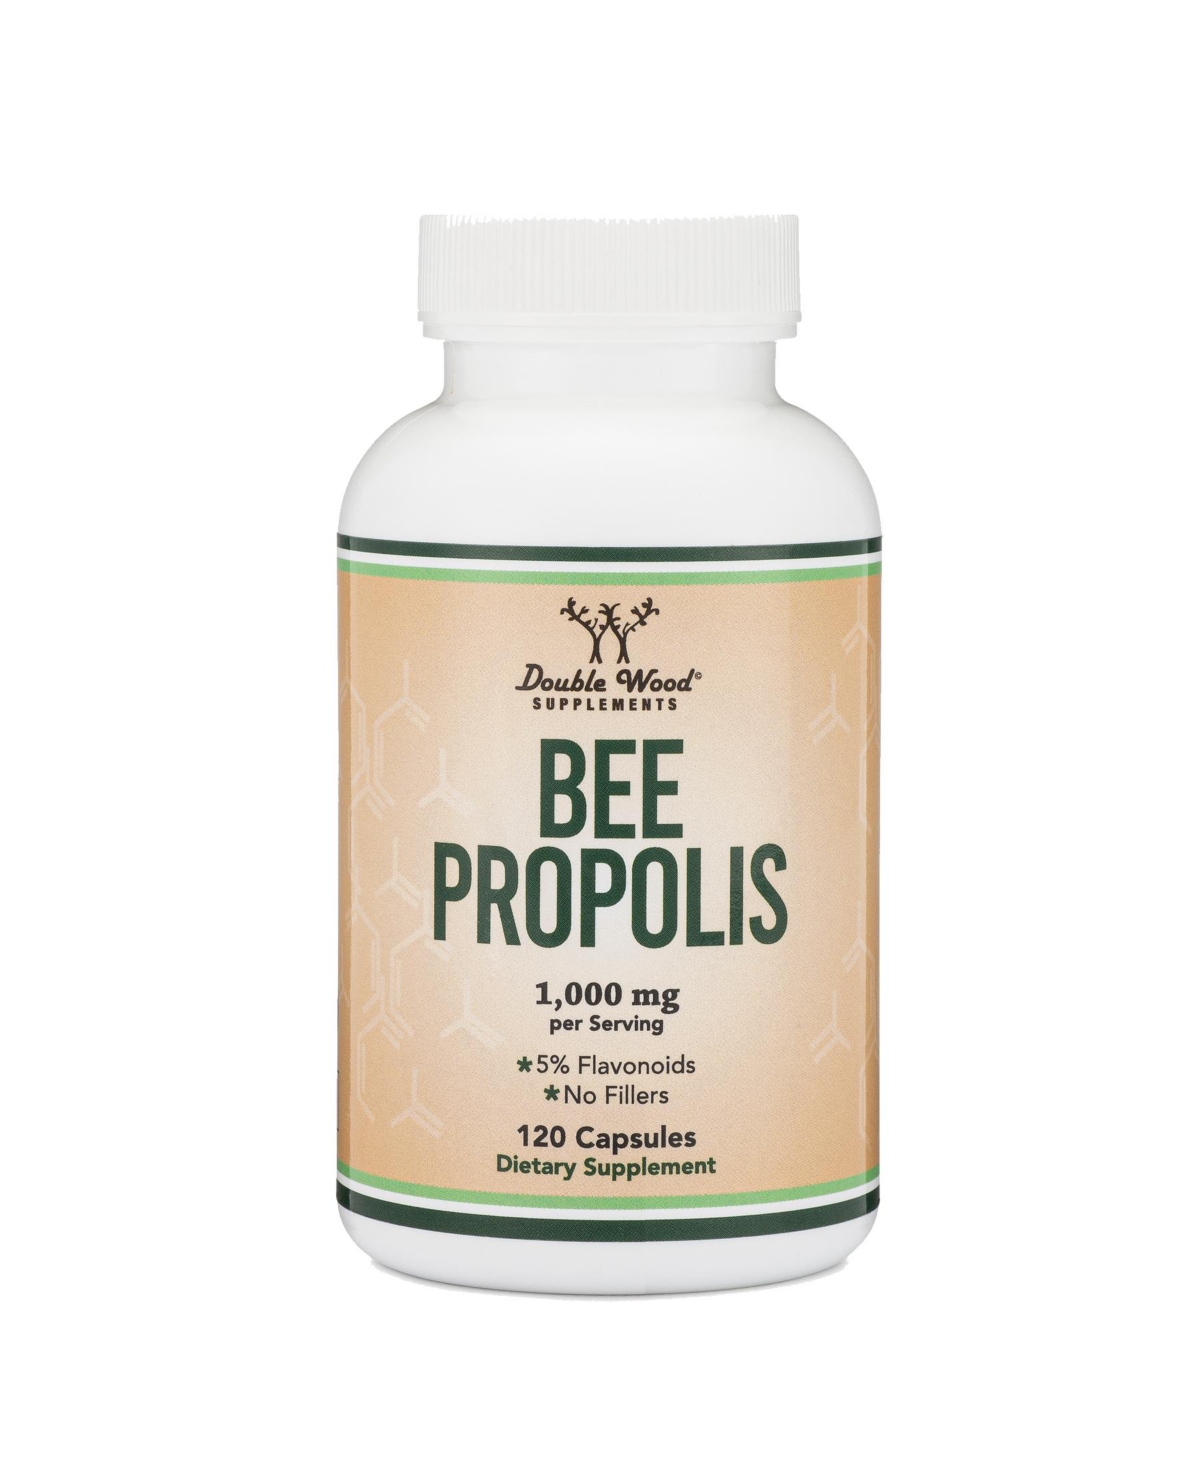 Bee Propolis - 120 capsules, 1000 mg servings